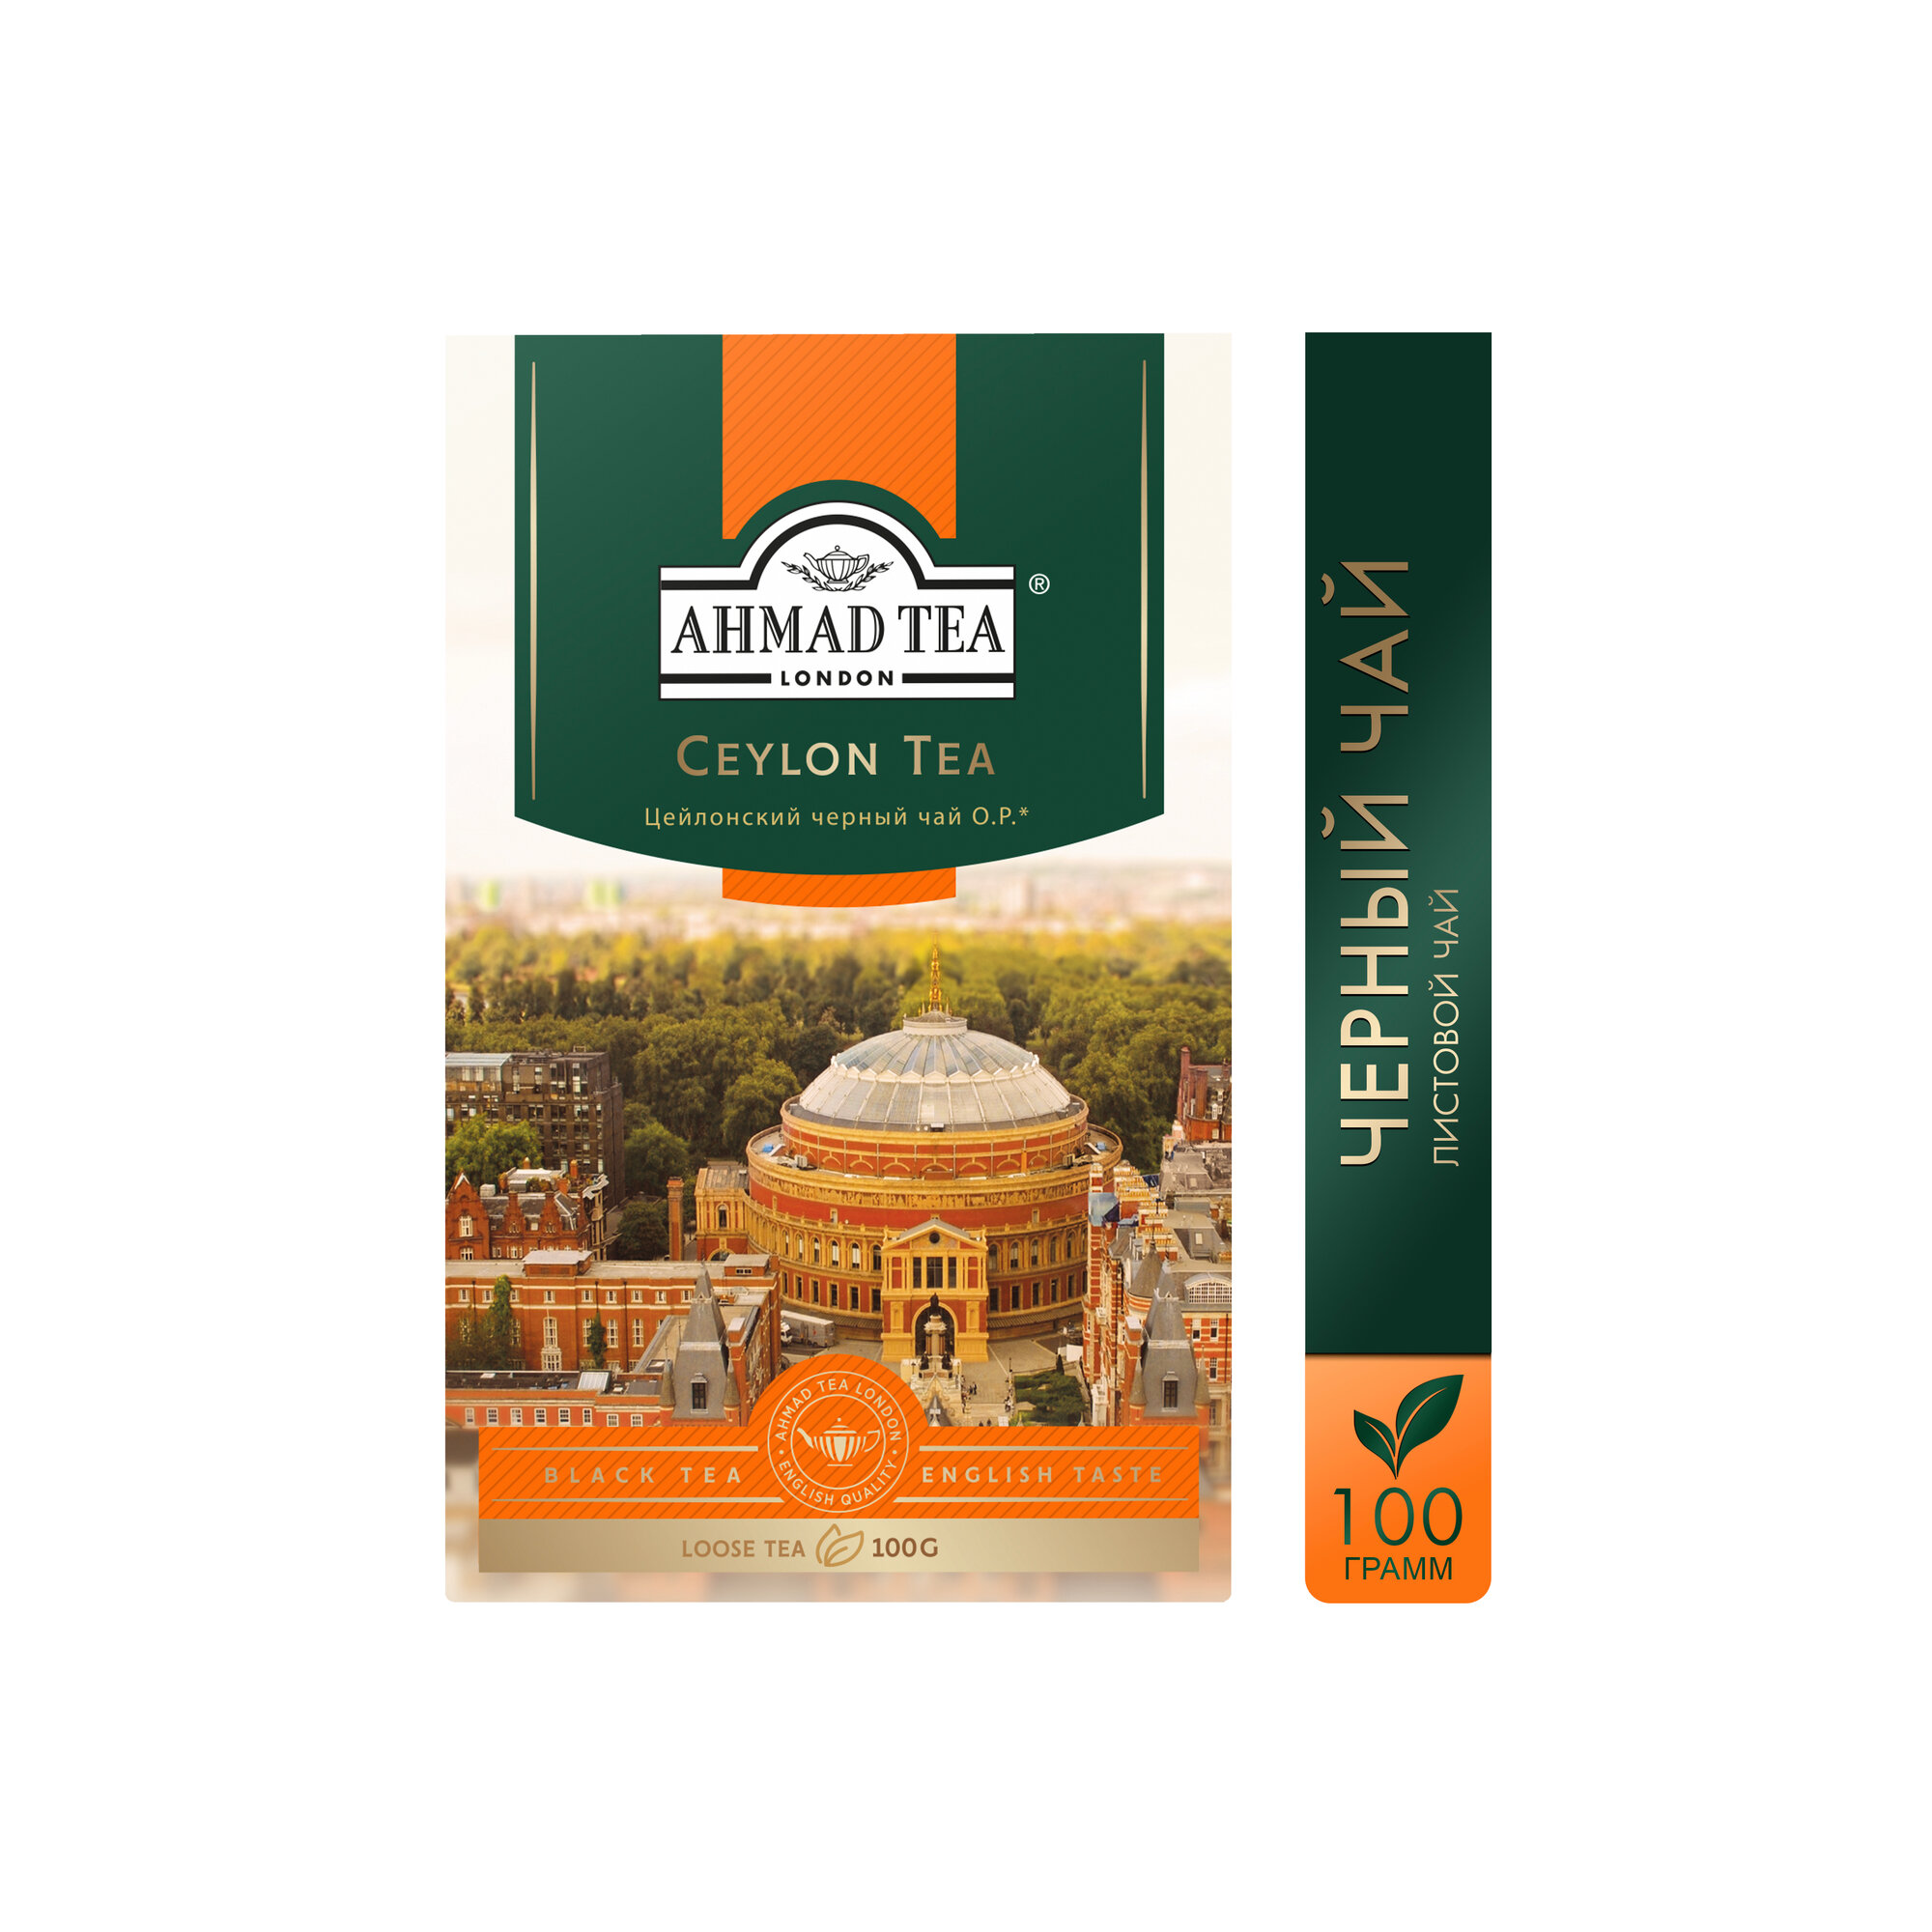 Чай "Ahmad Tea" Цейлонский чай OP, картон.коробка, 100г